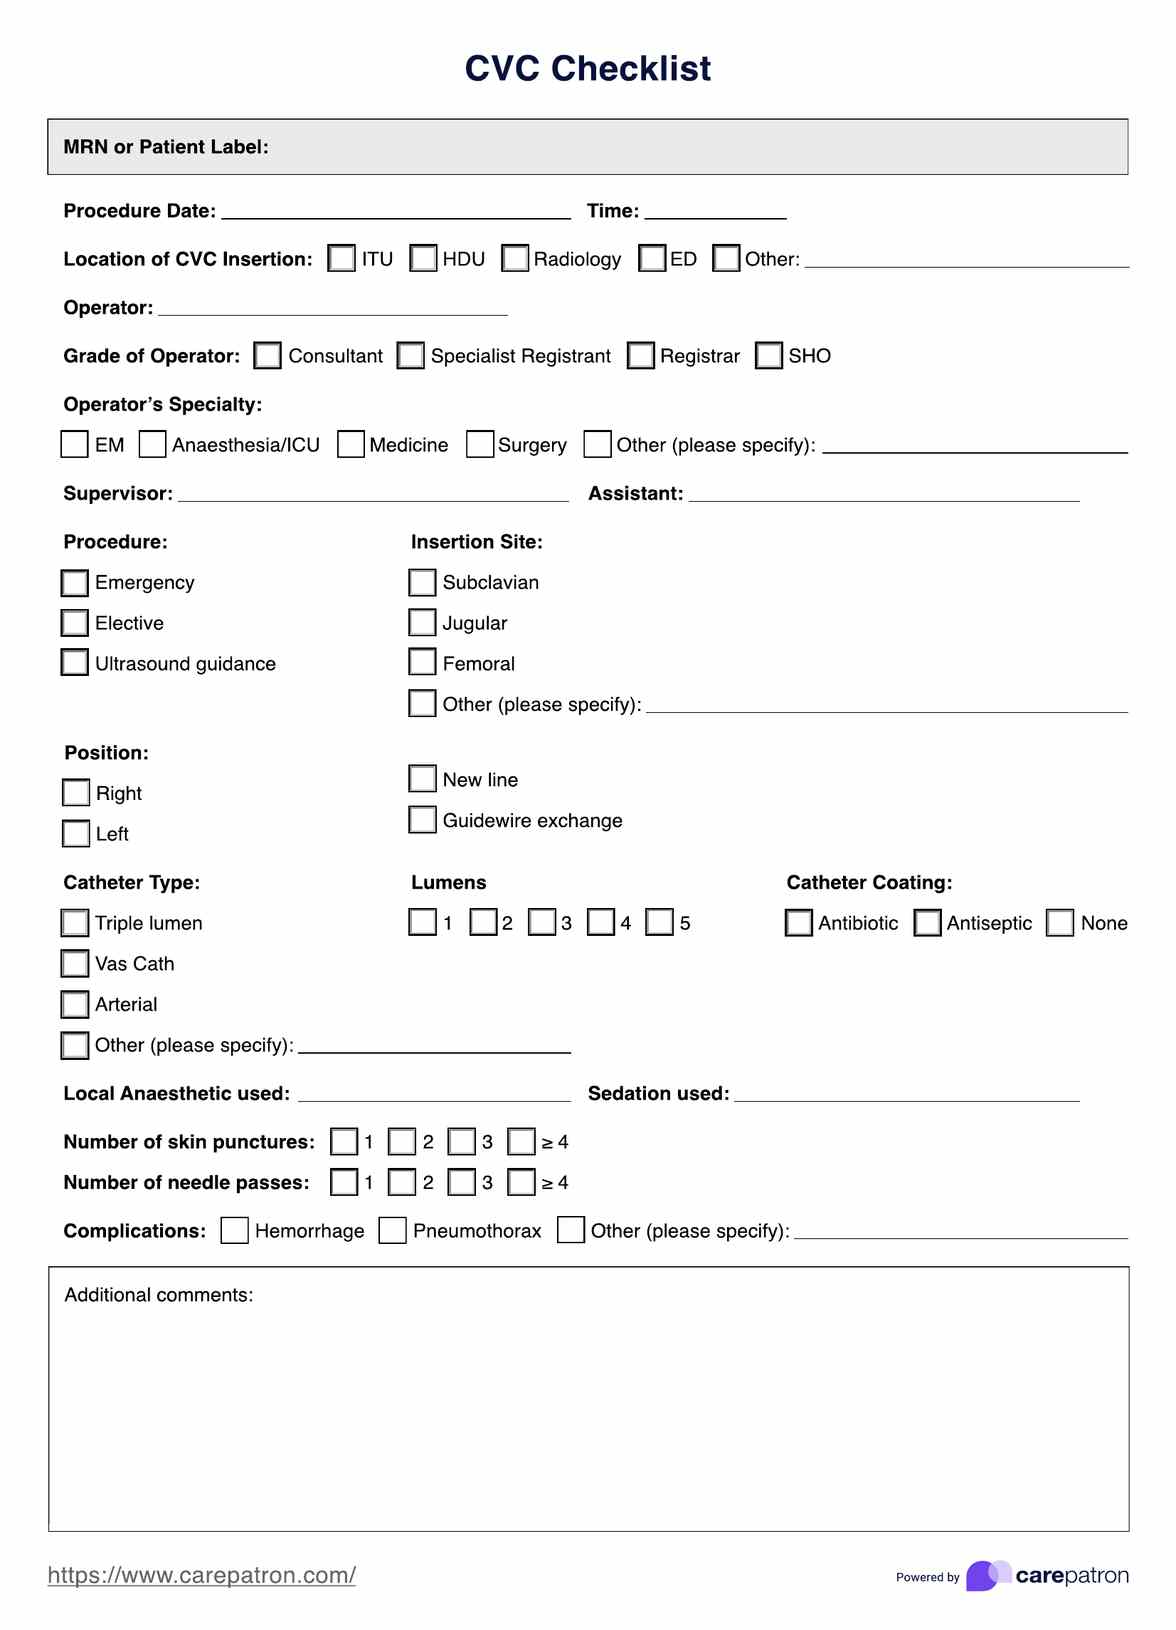 CVC Checklist PDF Example